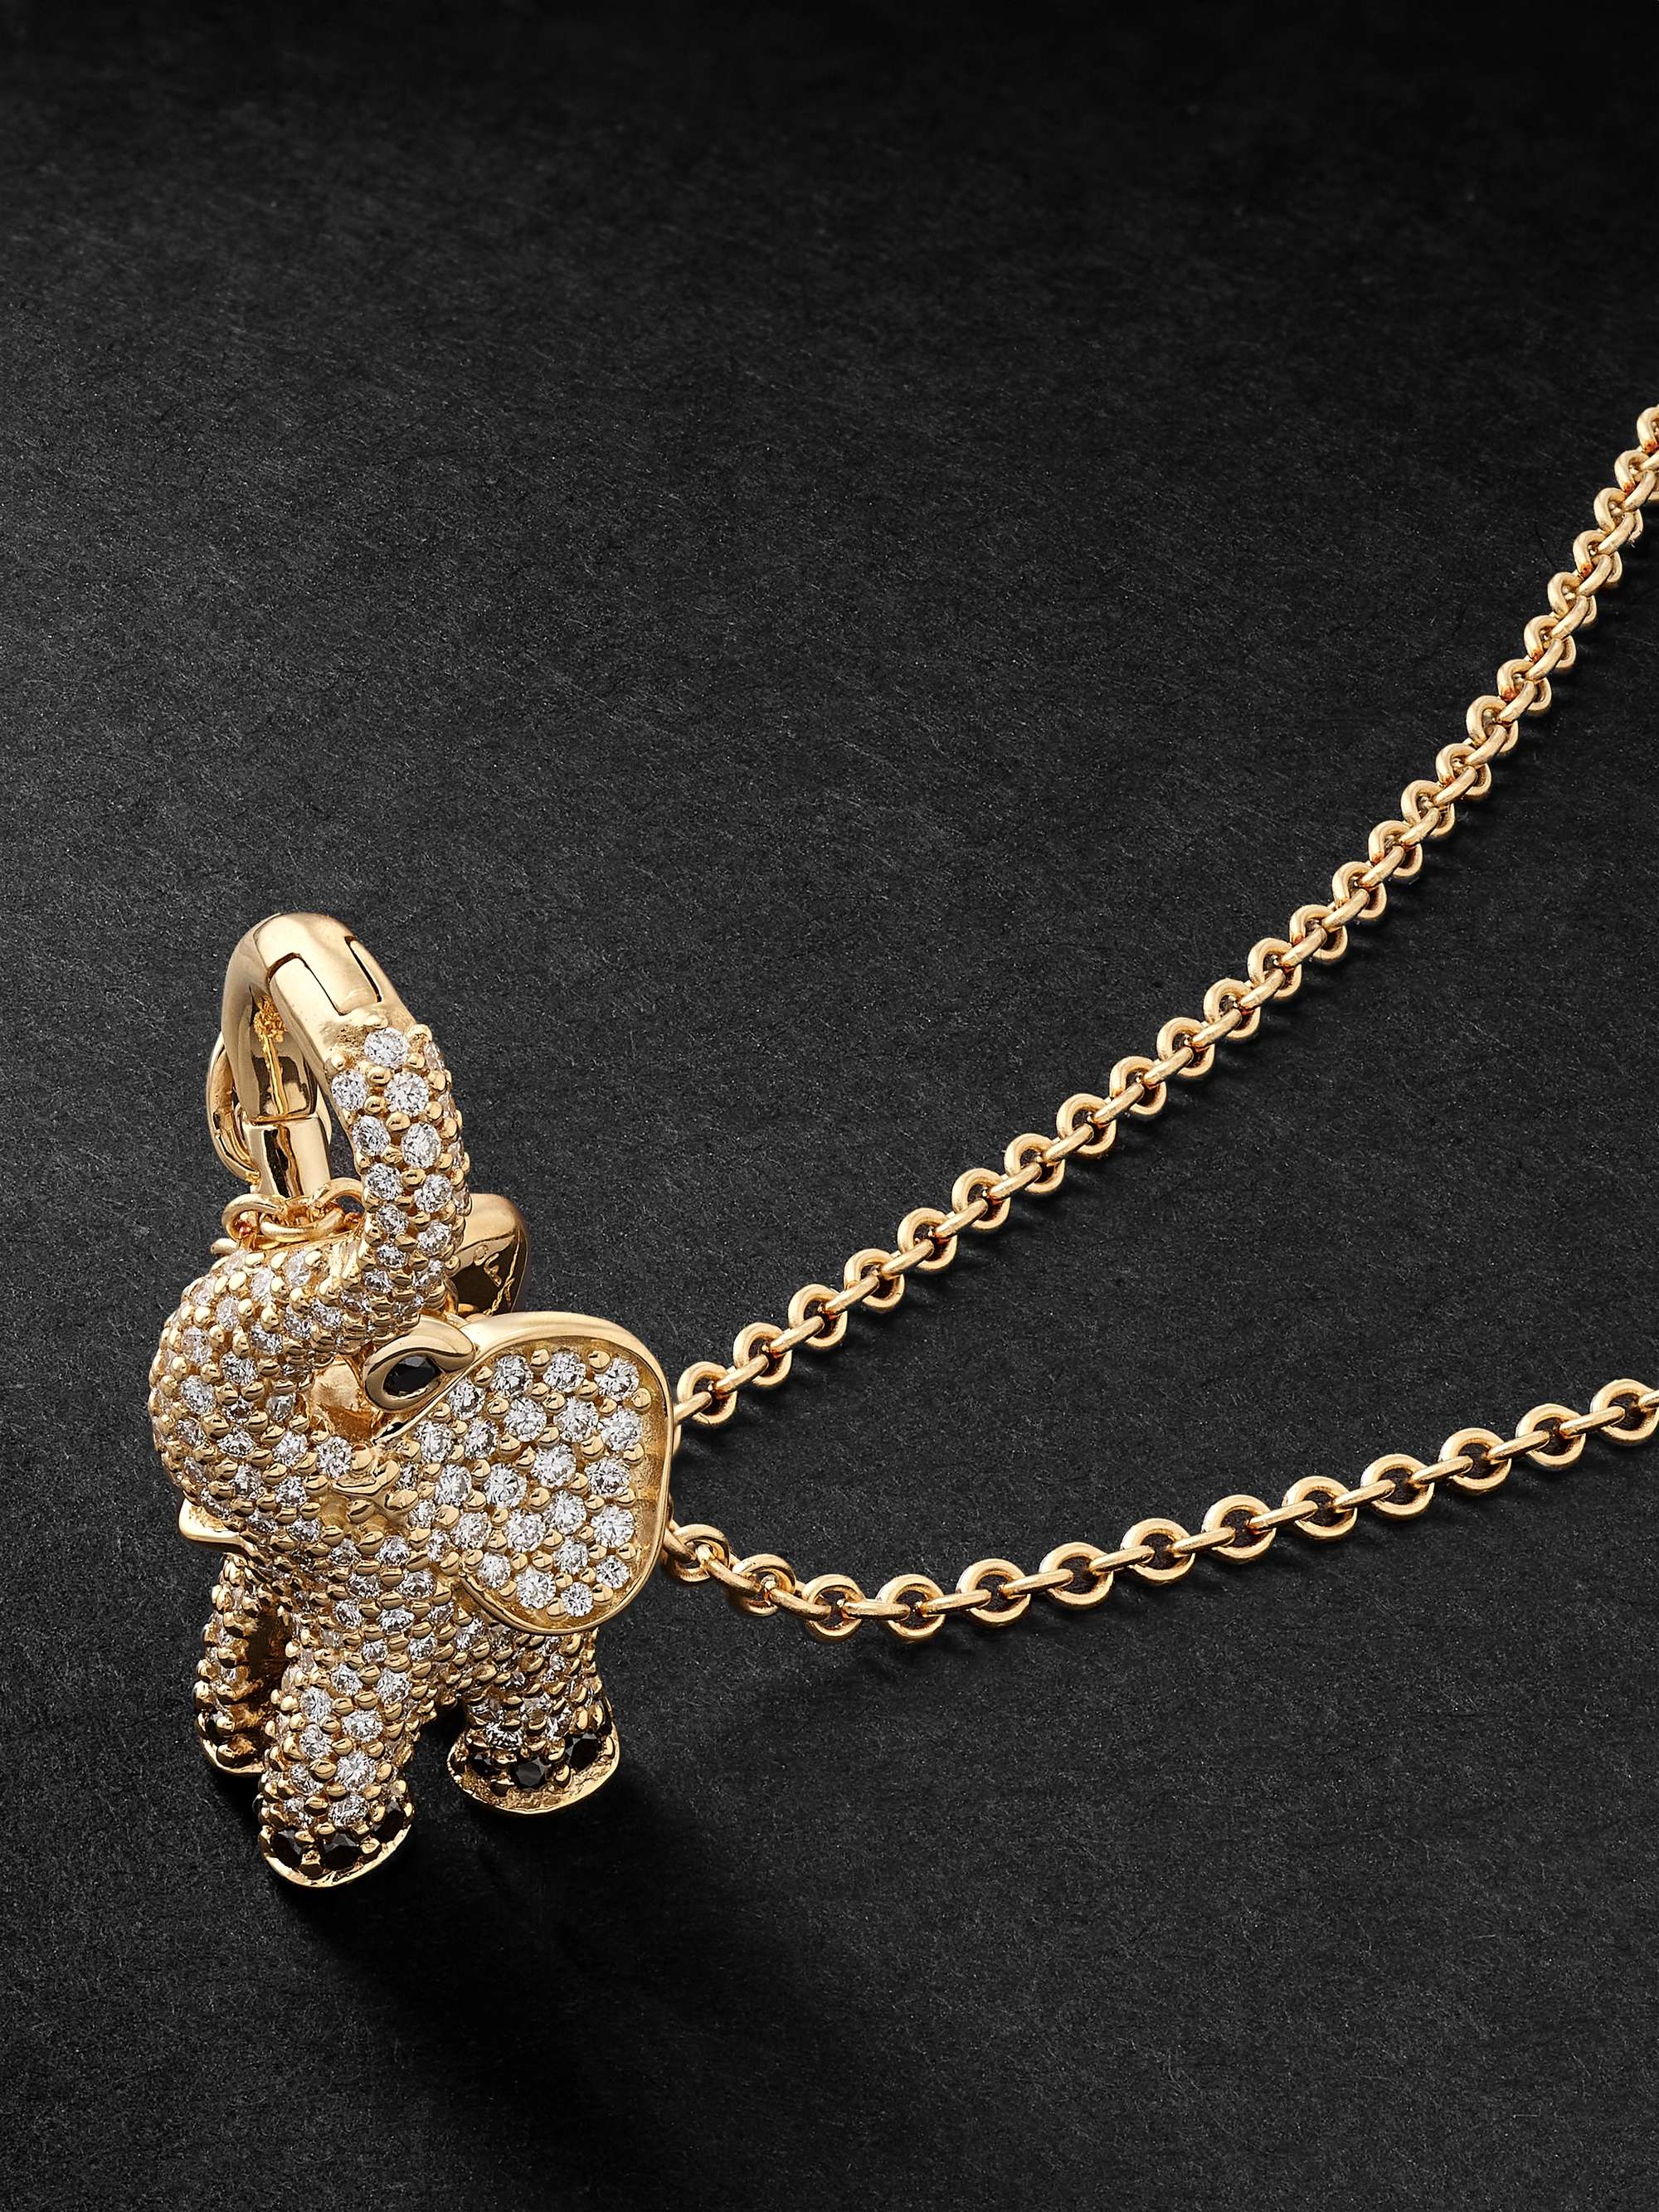 OLE LYNGGAARD COPENHAGEN Elephant Gold and Diamond Necklace